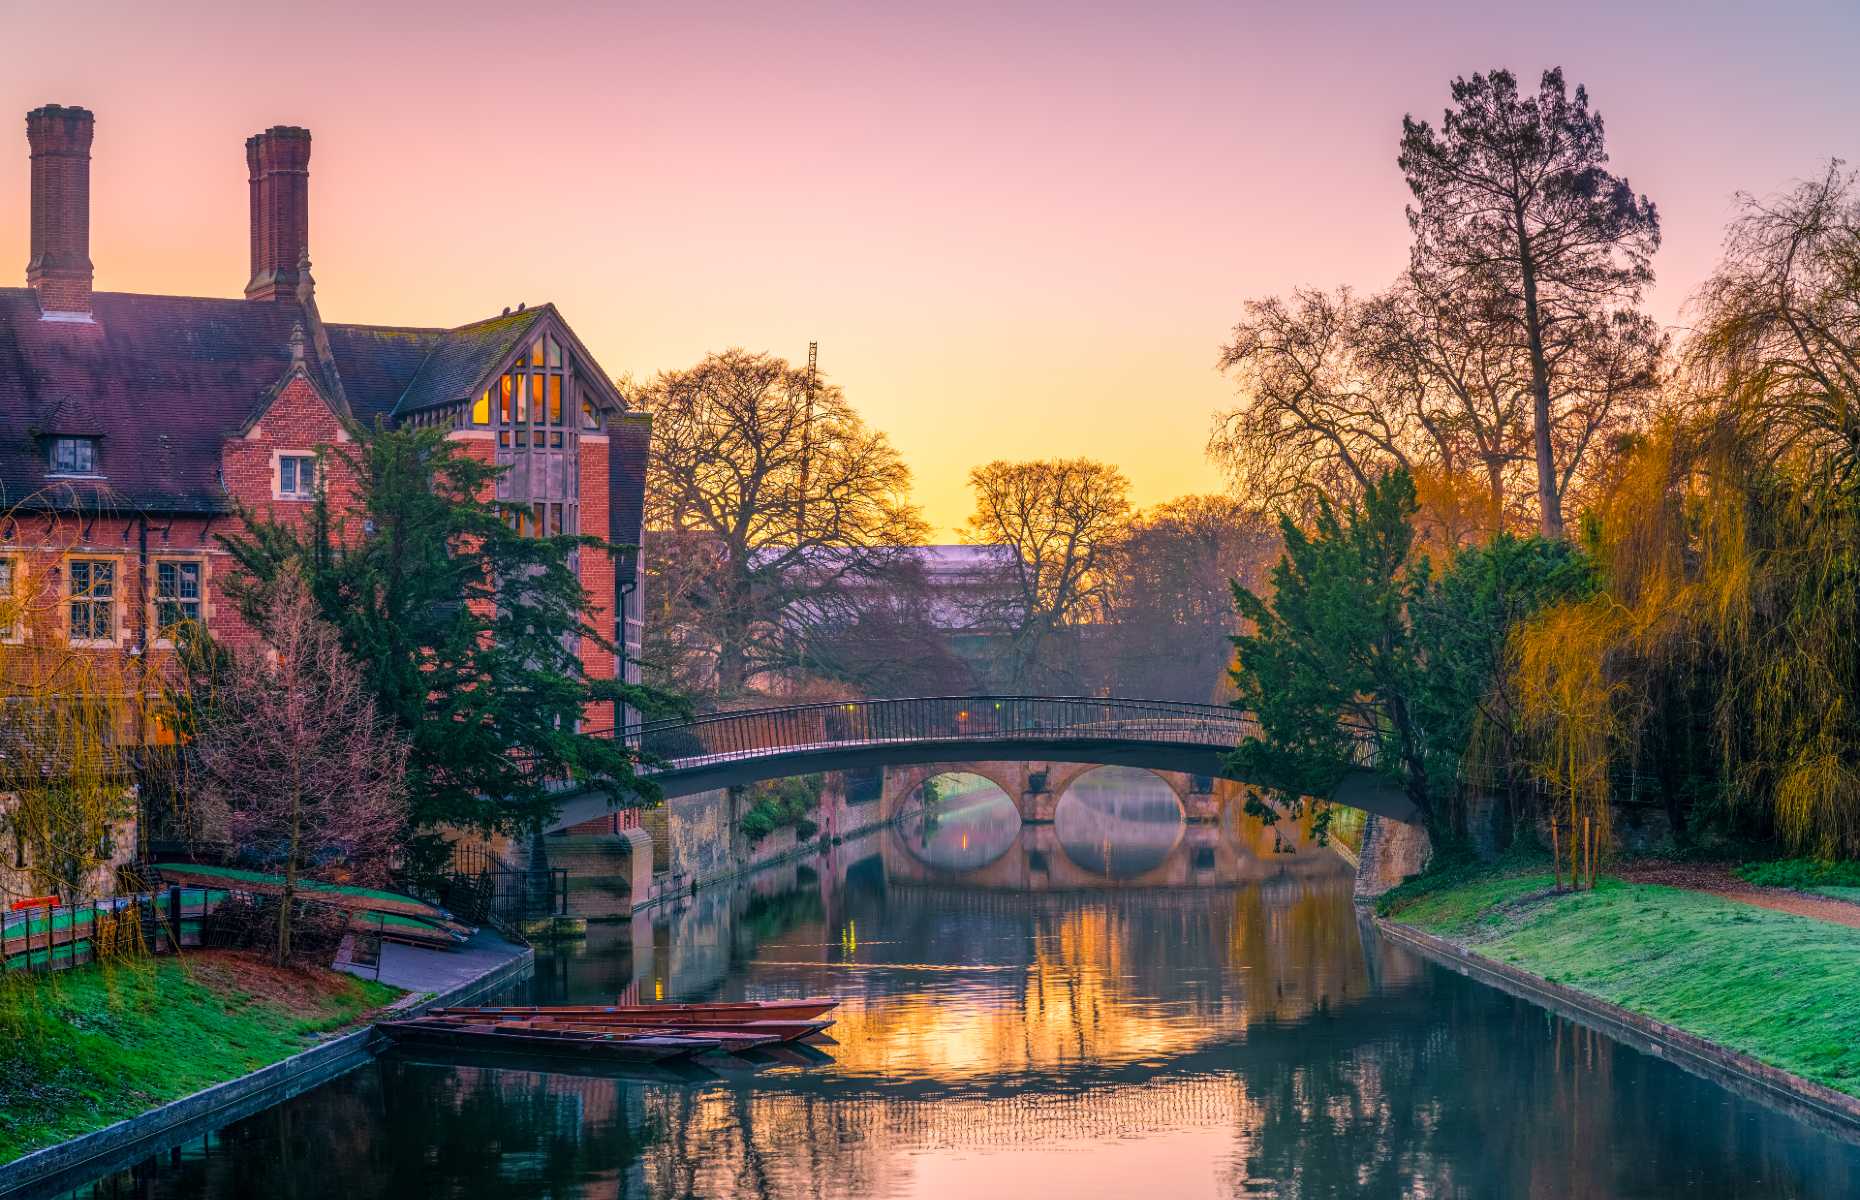 Cambridge along the River Cam (Image: Pajor Pawel/Shutterstock)